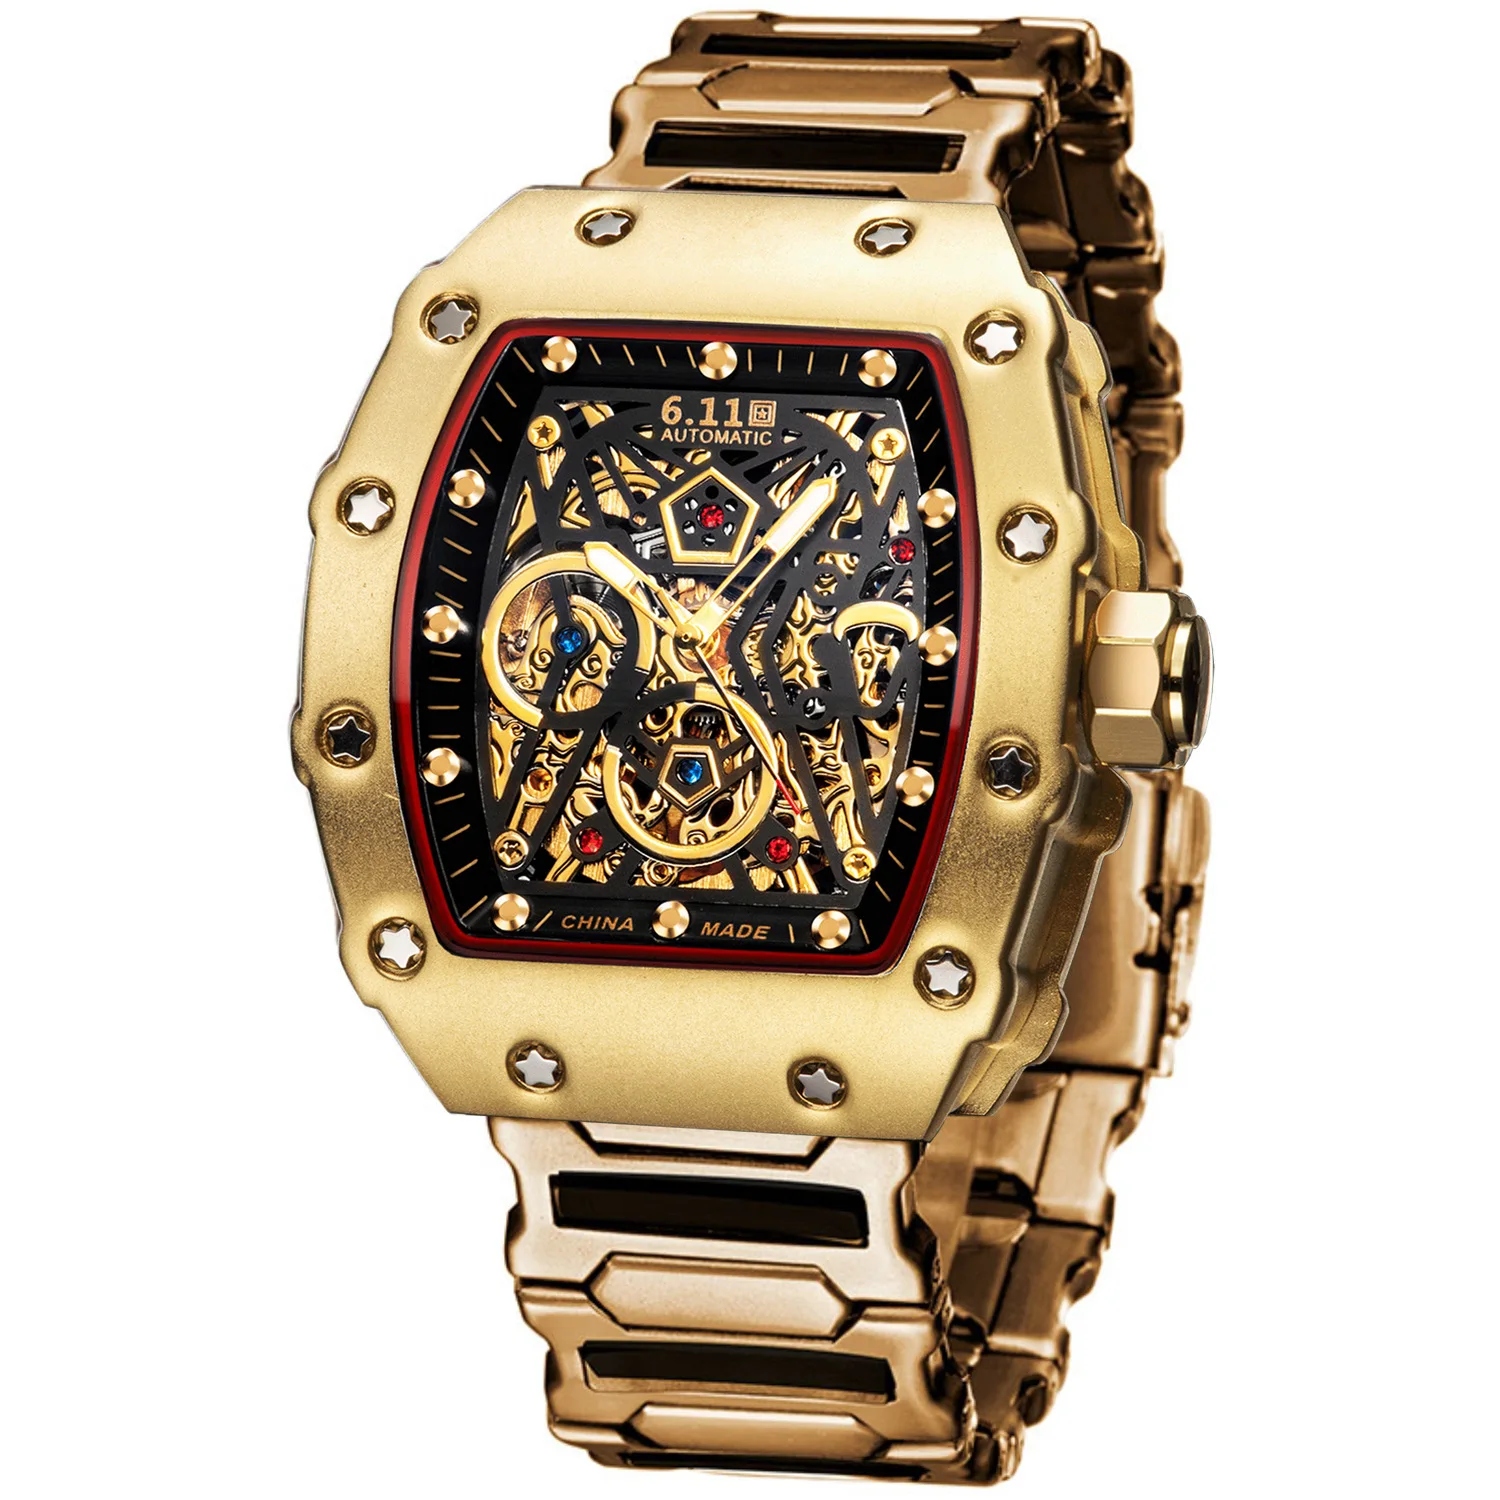 

6.11 Automatic Mechanical Wristwatch Richard 30m waterproof Belt Wine relogio Watch for Men relogio masculino montre homme